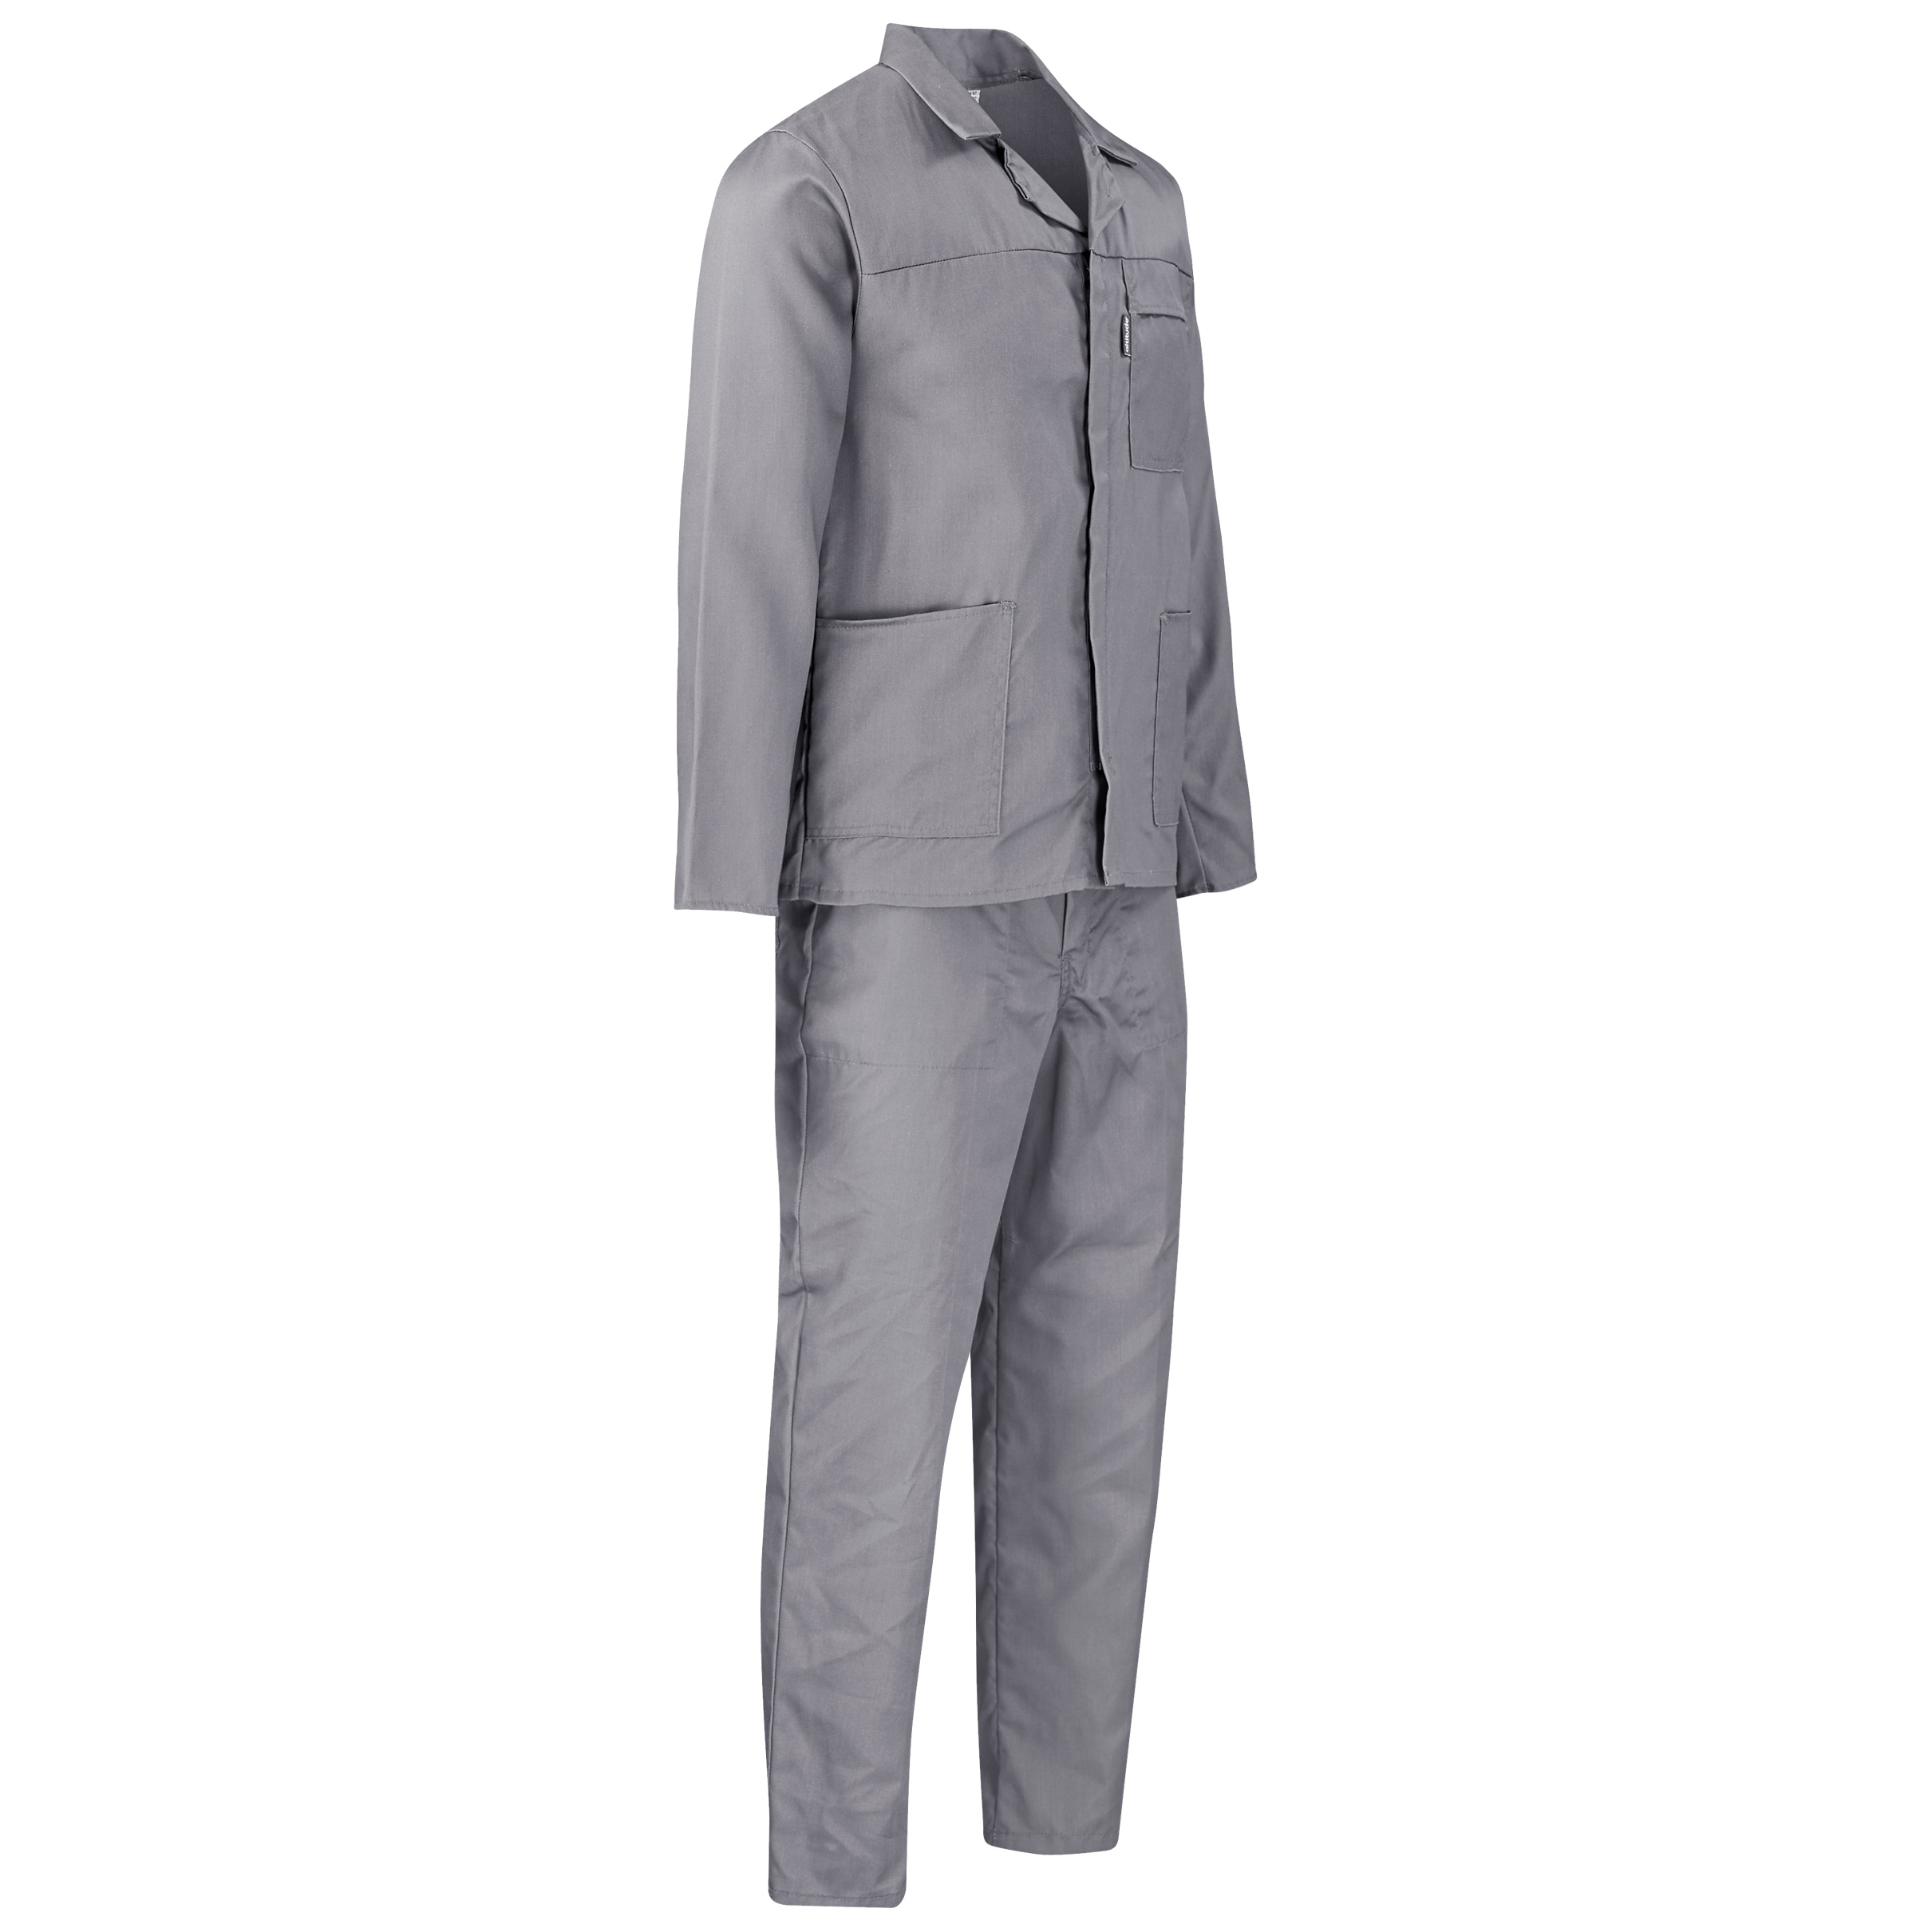 Trade Polycotton Conti Suit grey ALT-1101-GY-GHSI_default by brandxellence workwear